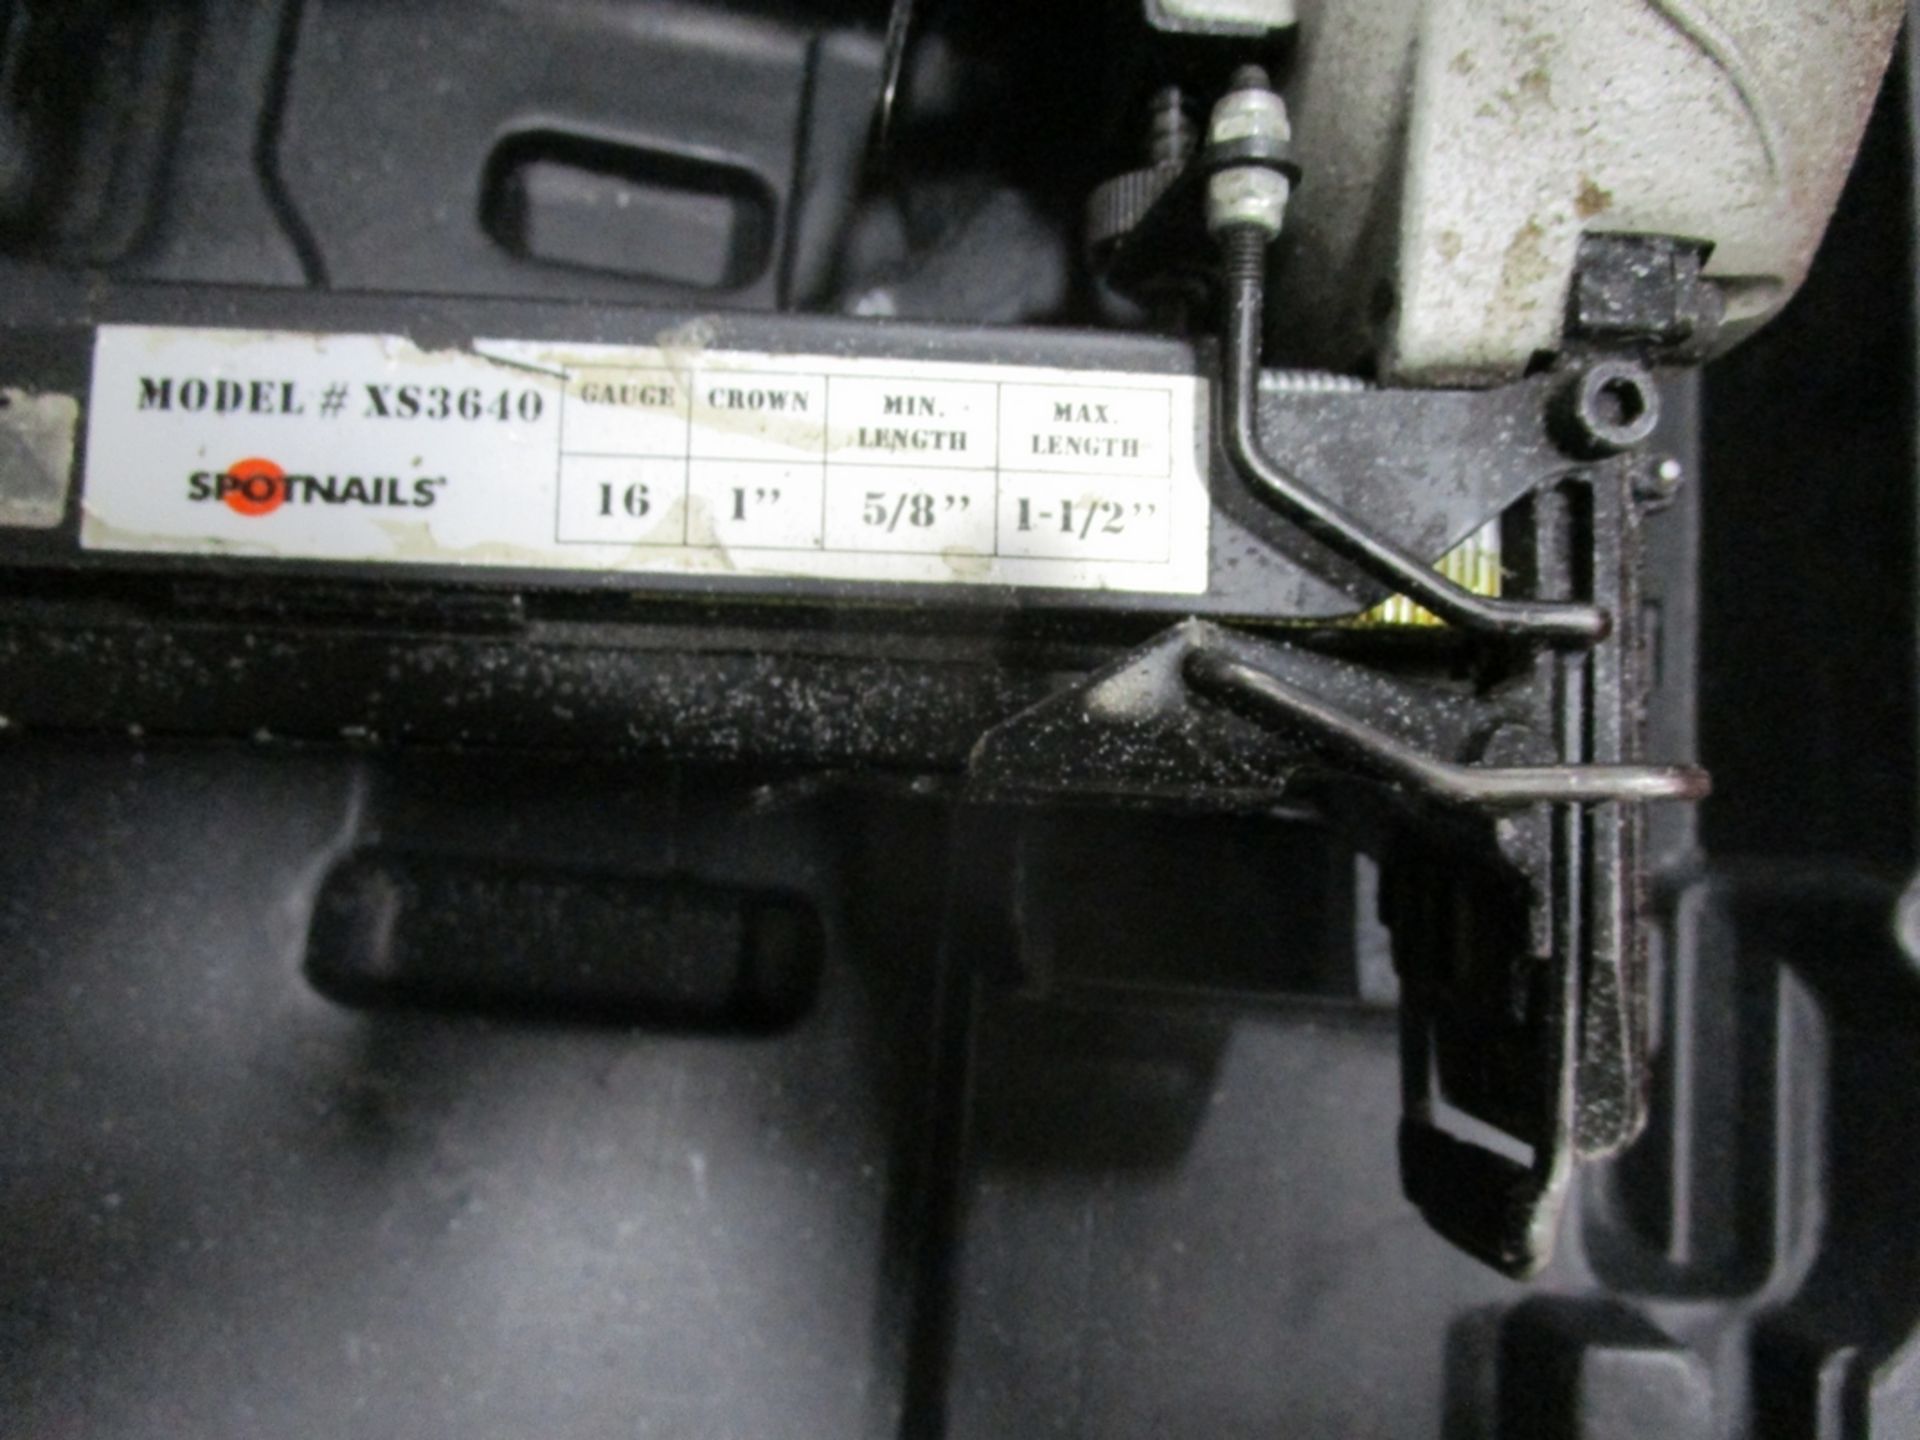 Spotnails XS3640 Pneumatic Staple Gun - Image 2 of 2